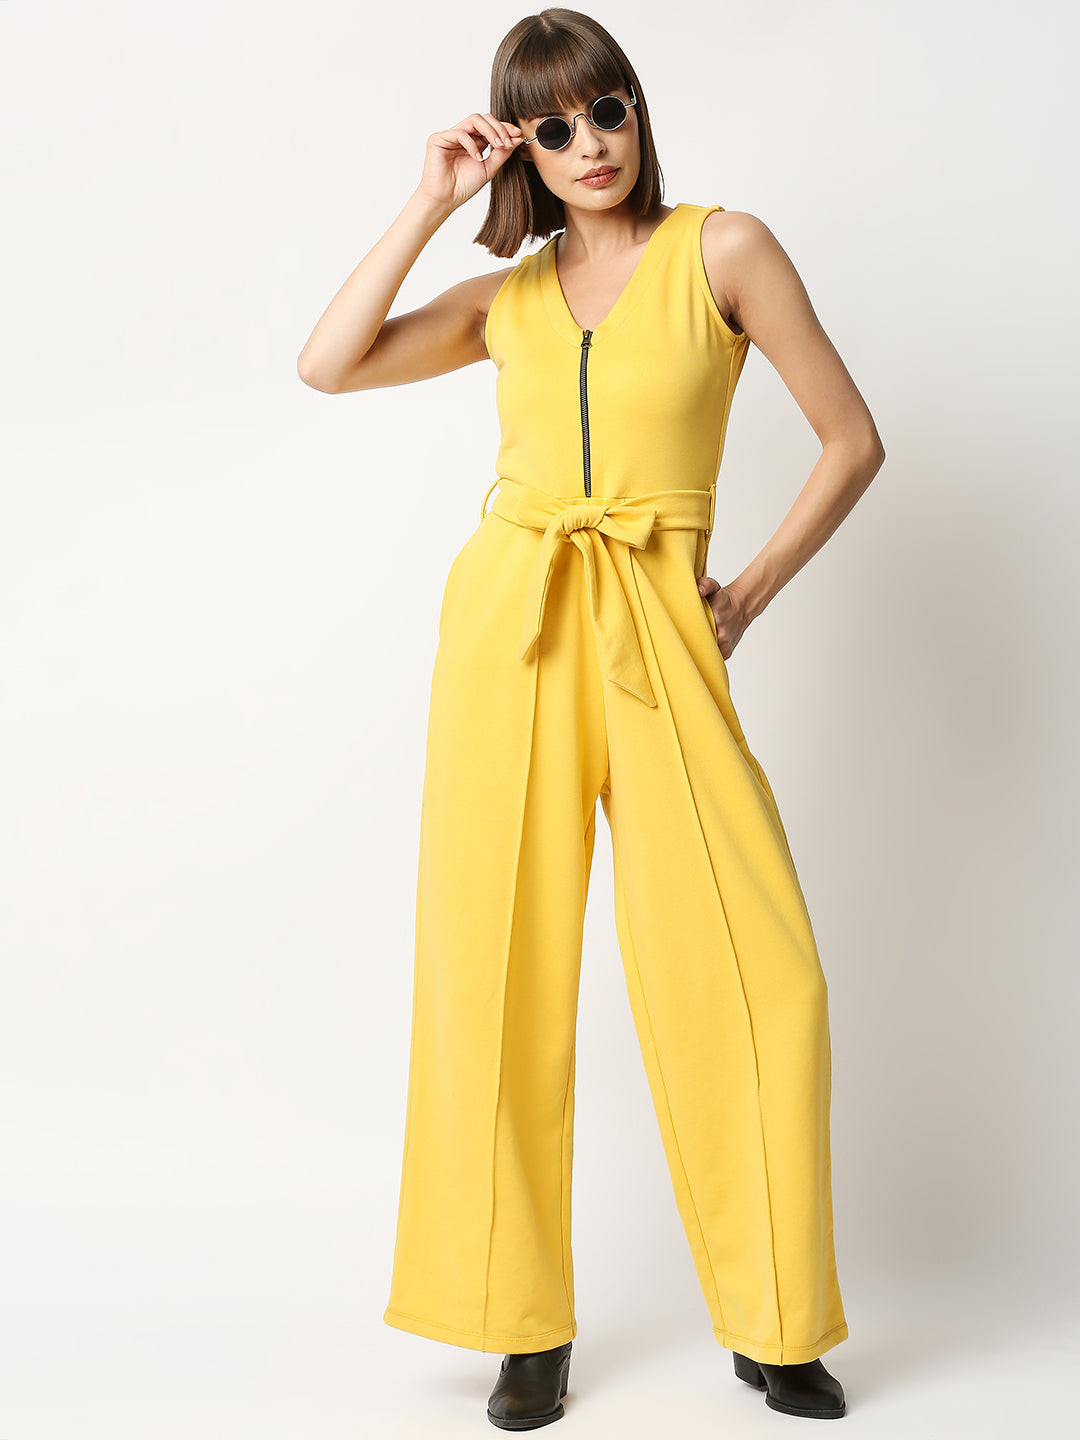 Buy BLAMBLACK Women V Neck Short Top Lemon Yellow Color Solid Sleeveless